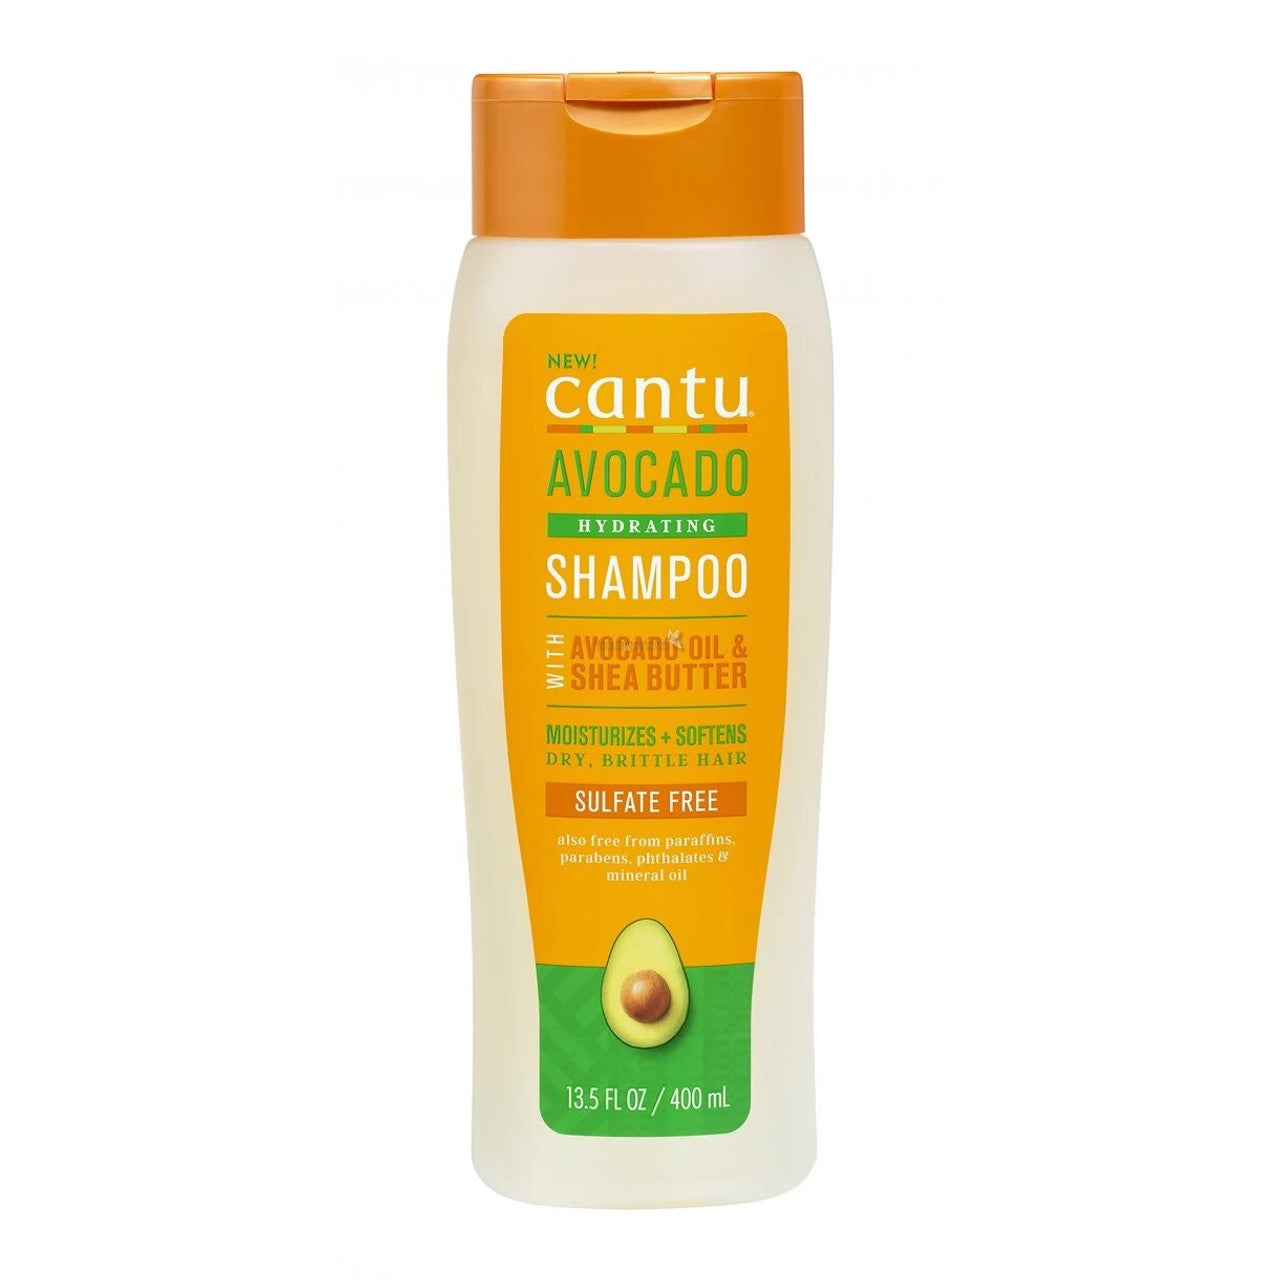 Cantu Avocado & Shea Butter Hydrating Shampoo 13.5oz